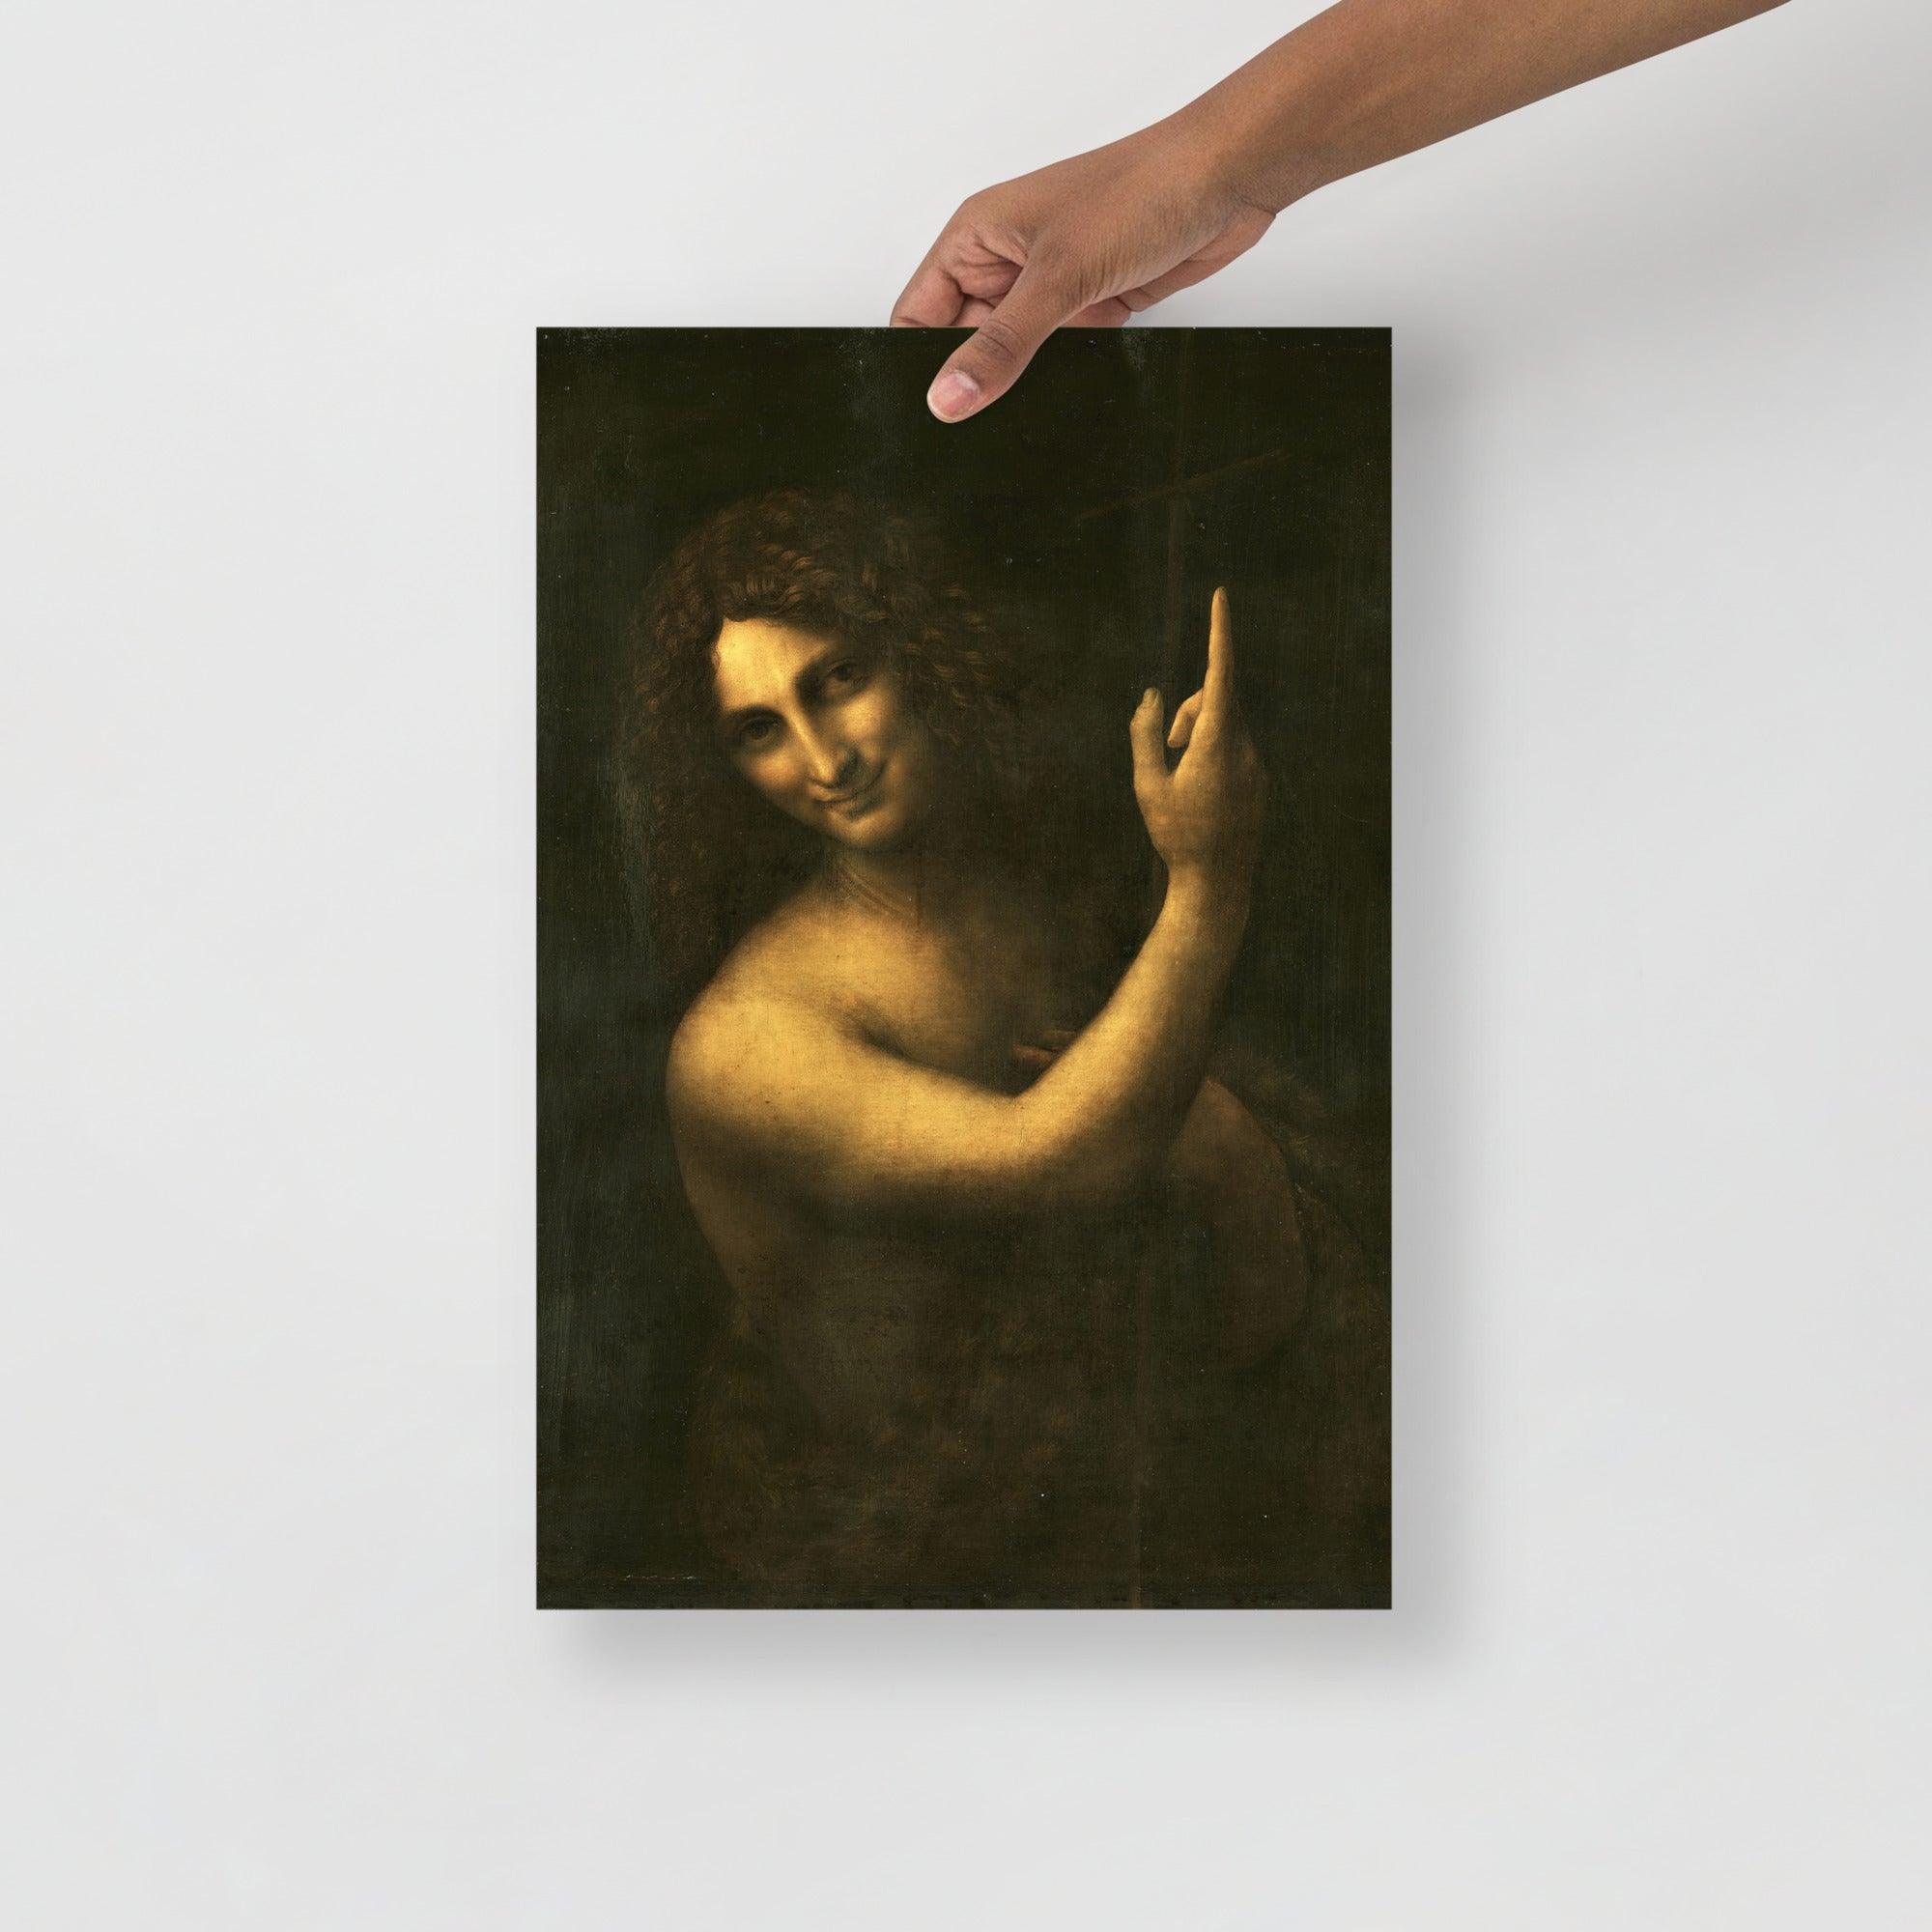 A Saint John the Baptist by Leonardo da Vinci poster on a plain backdrop in size 12x18”.